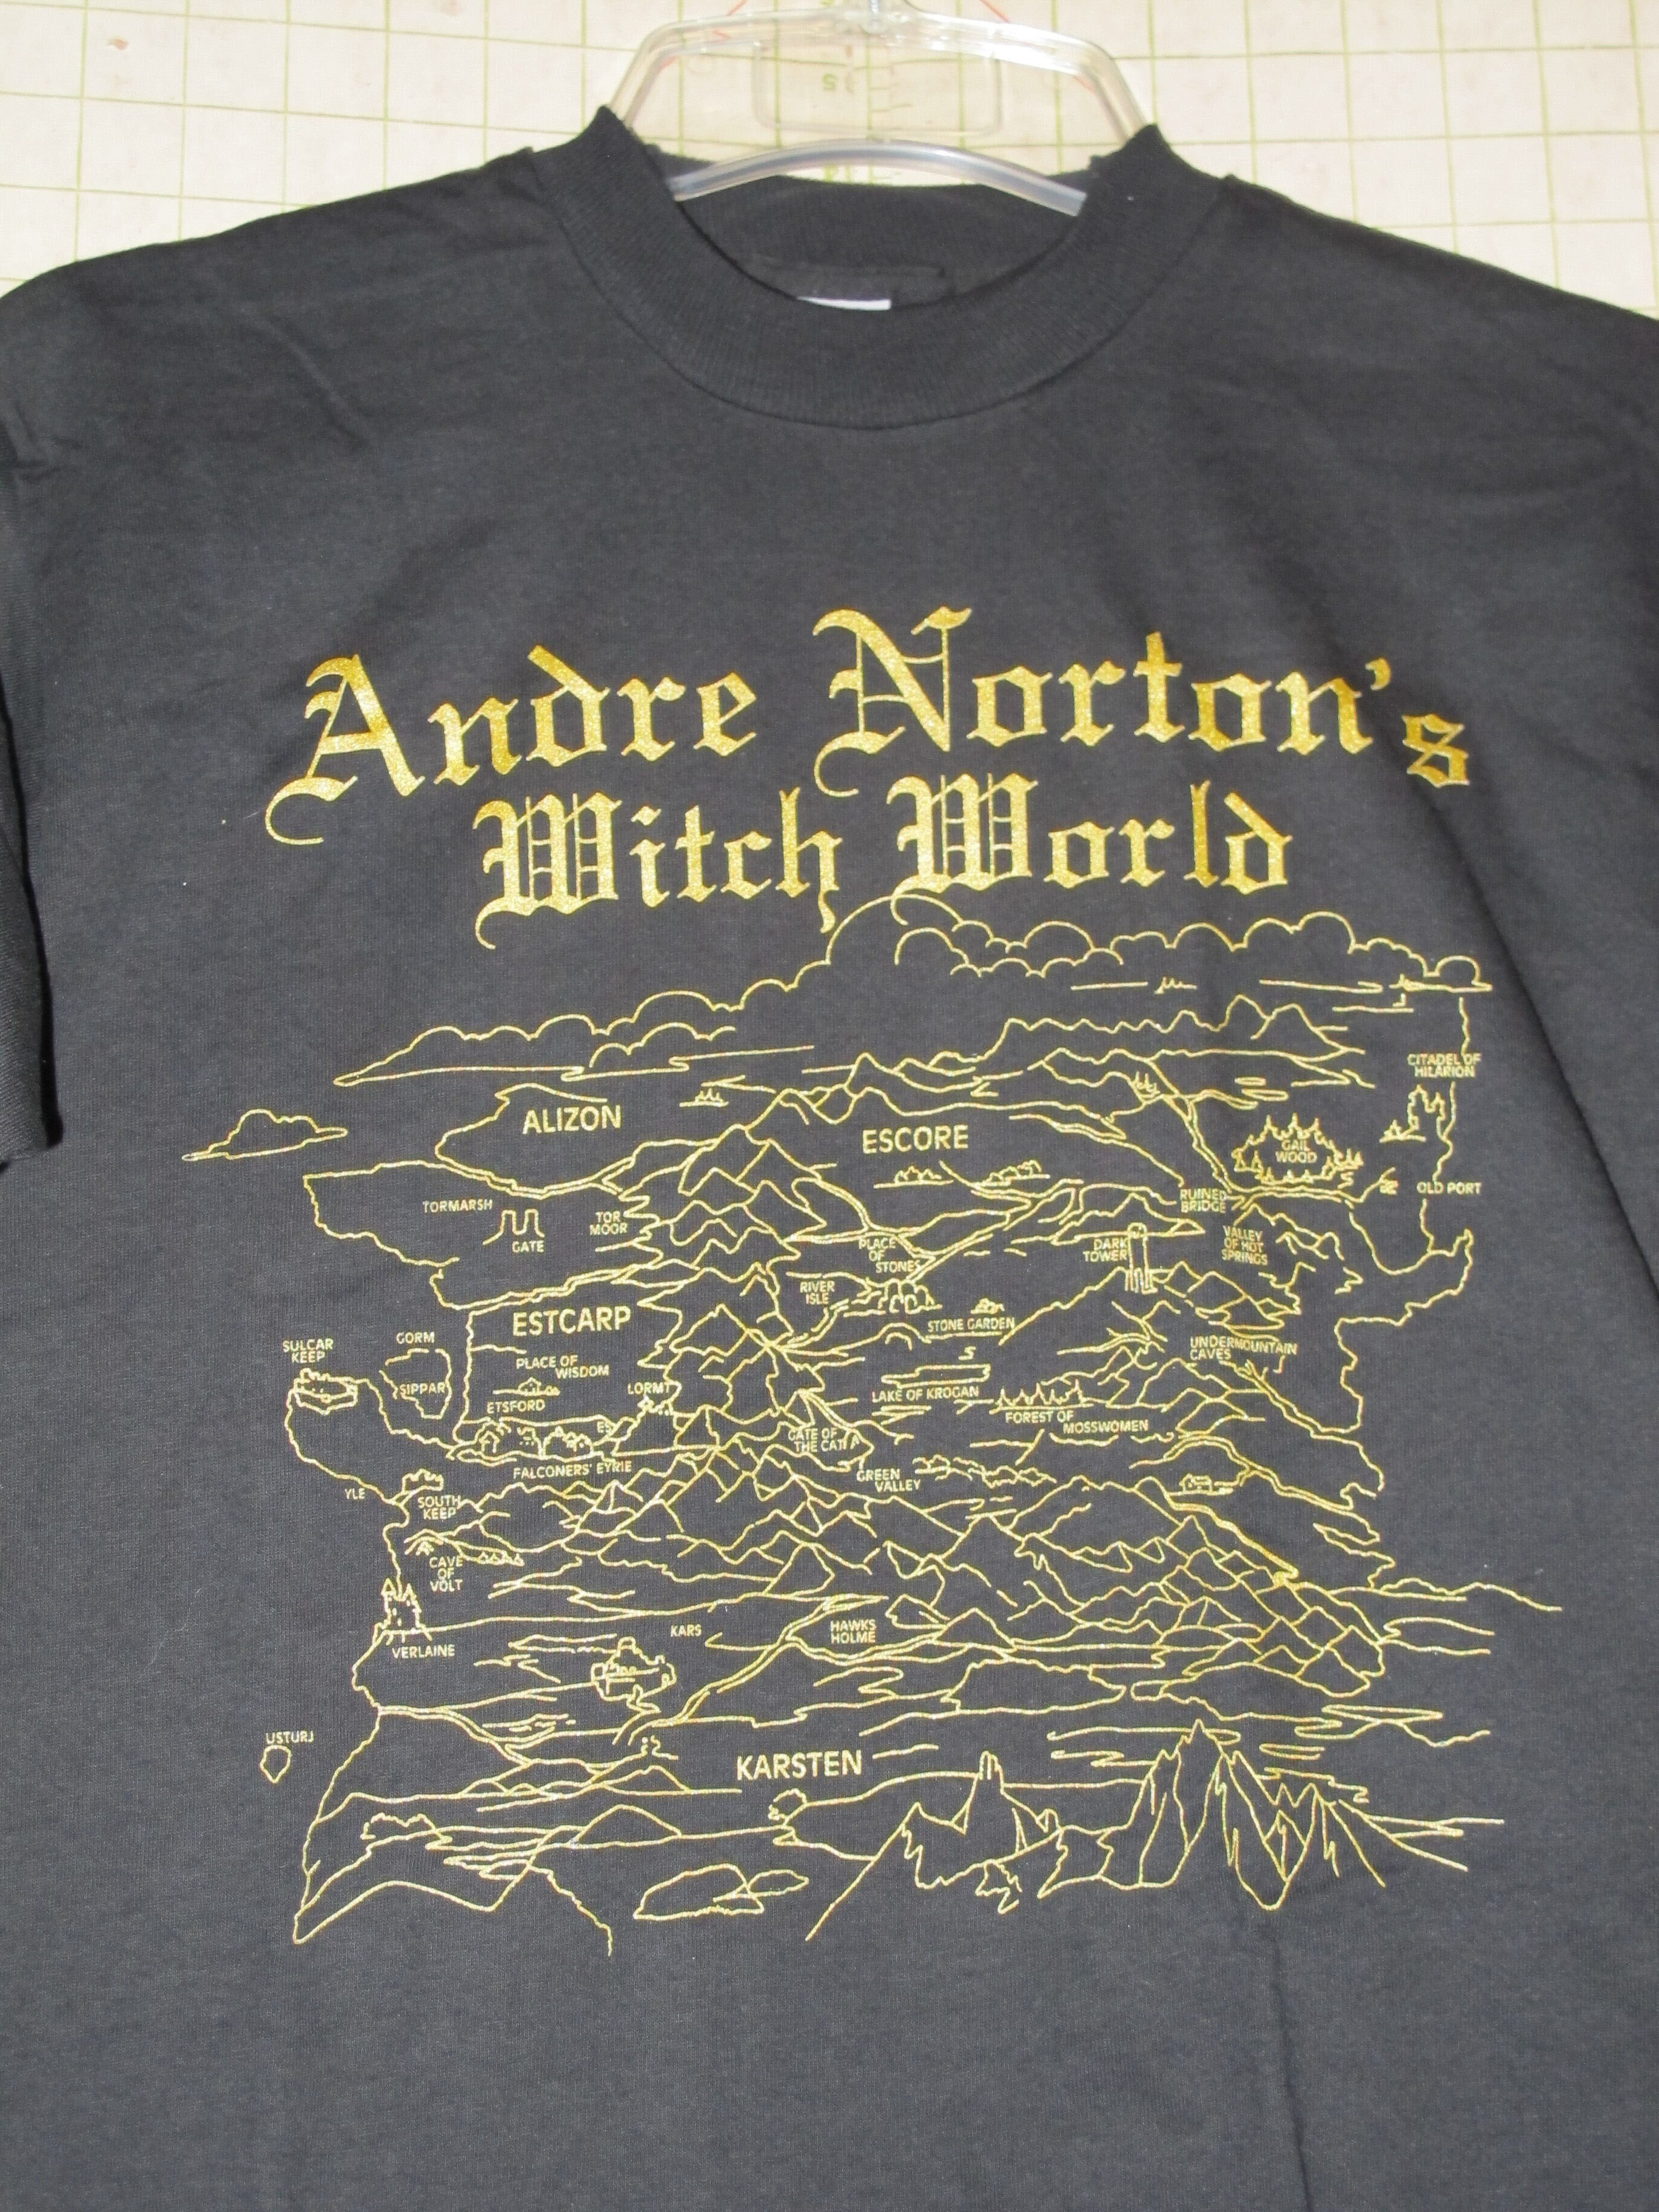 witch world tee shirt front closeup